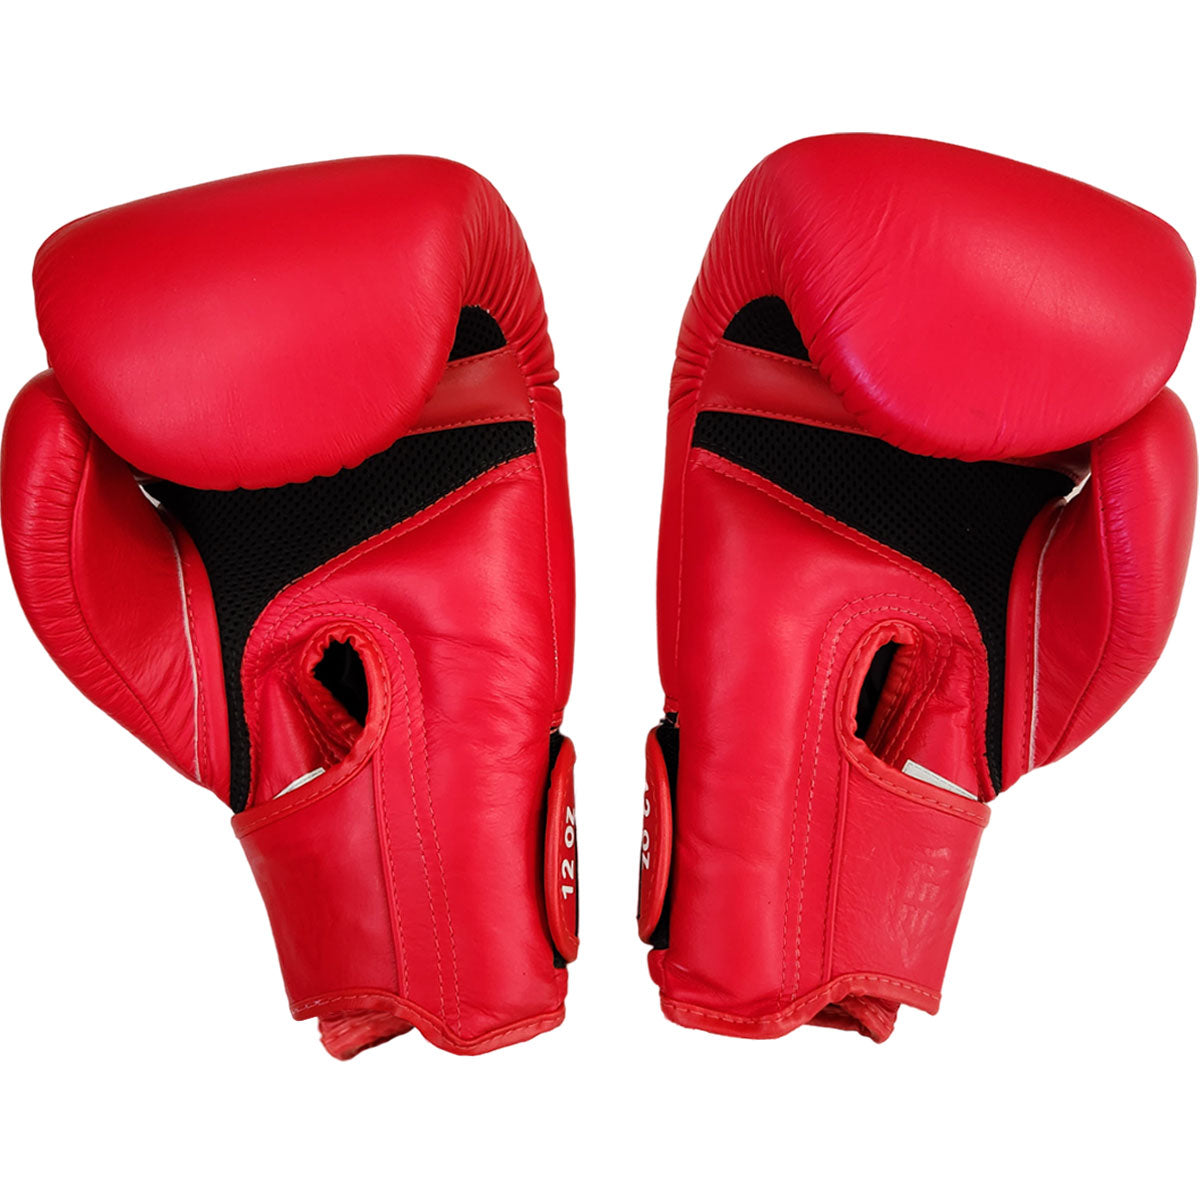 Boxing Gloves Top King TKBGSA Air Red Muay Thai